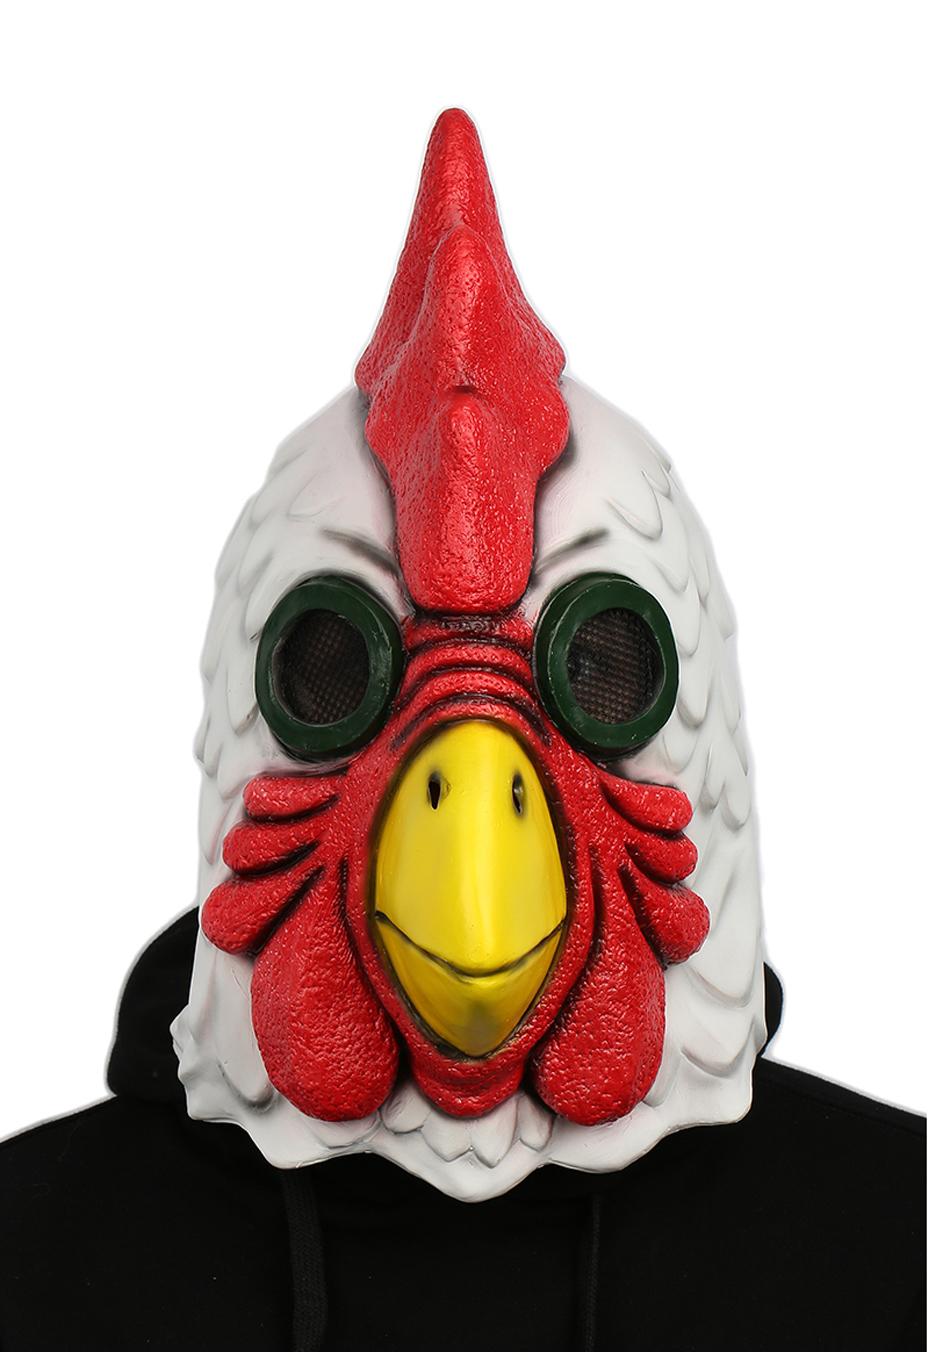 Cosliveゲームホットラインマイアミコックマスクラテックス完全な頭部コスプレヘルメット衣装小道具ハロウィン大人 マスクラテックス ハロウィンマスクマスク Aliexpress